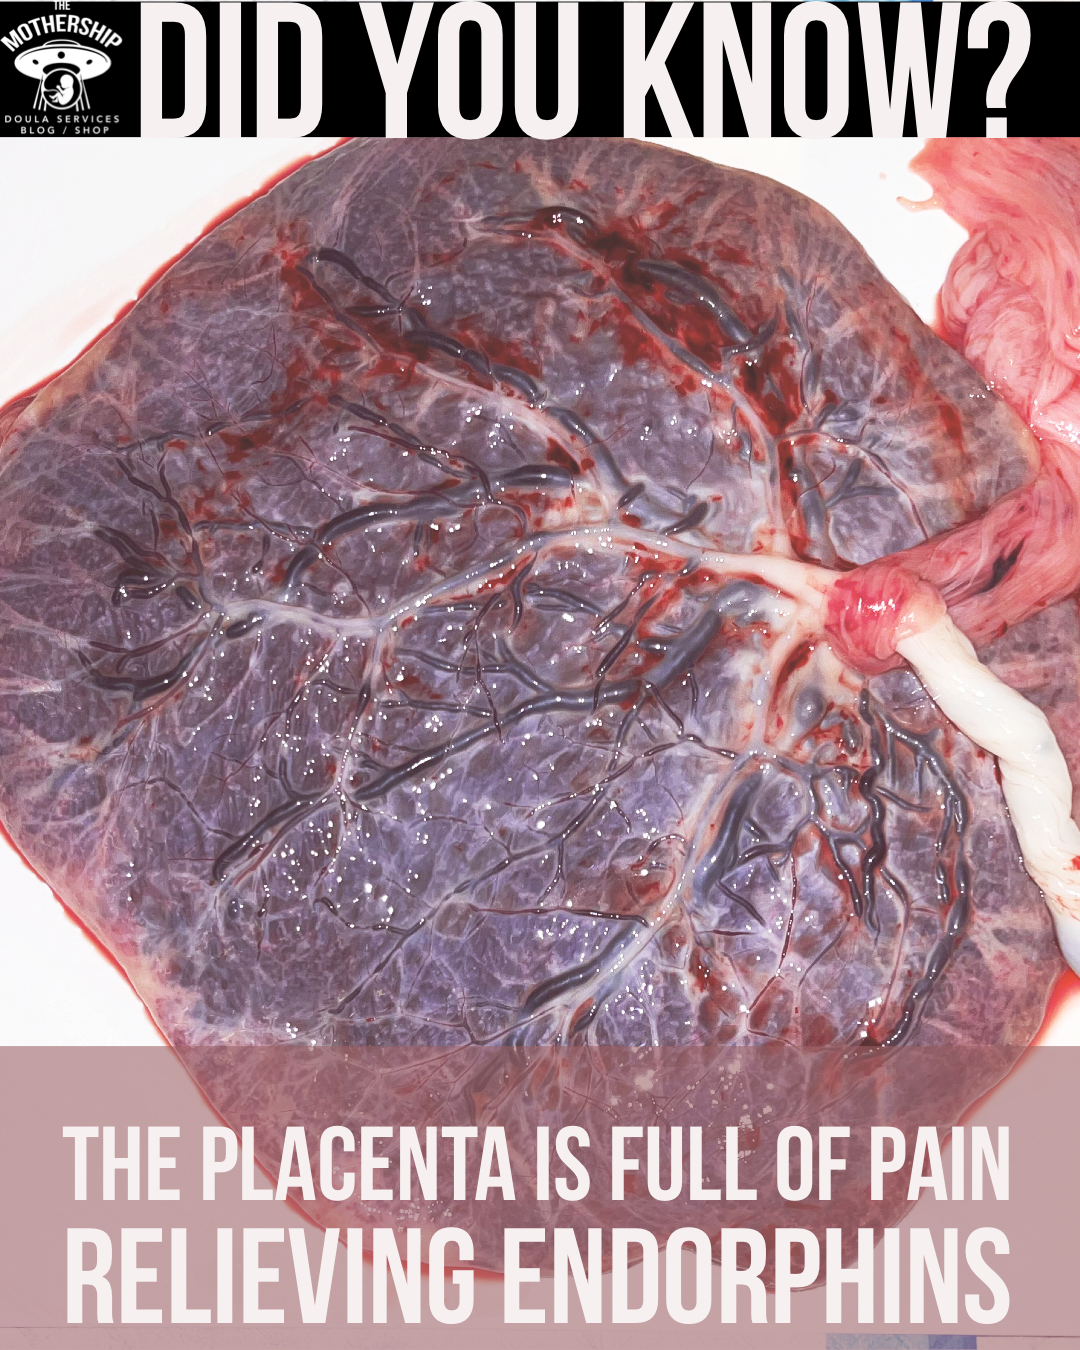 Placenta Encapsulation In-Person Training | Mott Haven, Bronx, NY